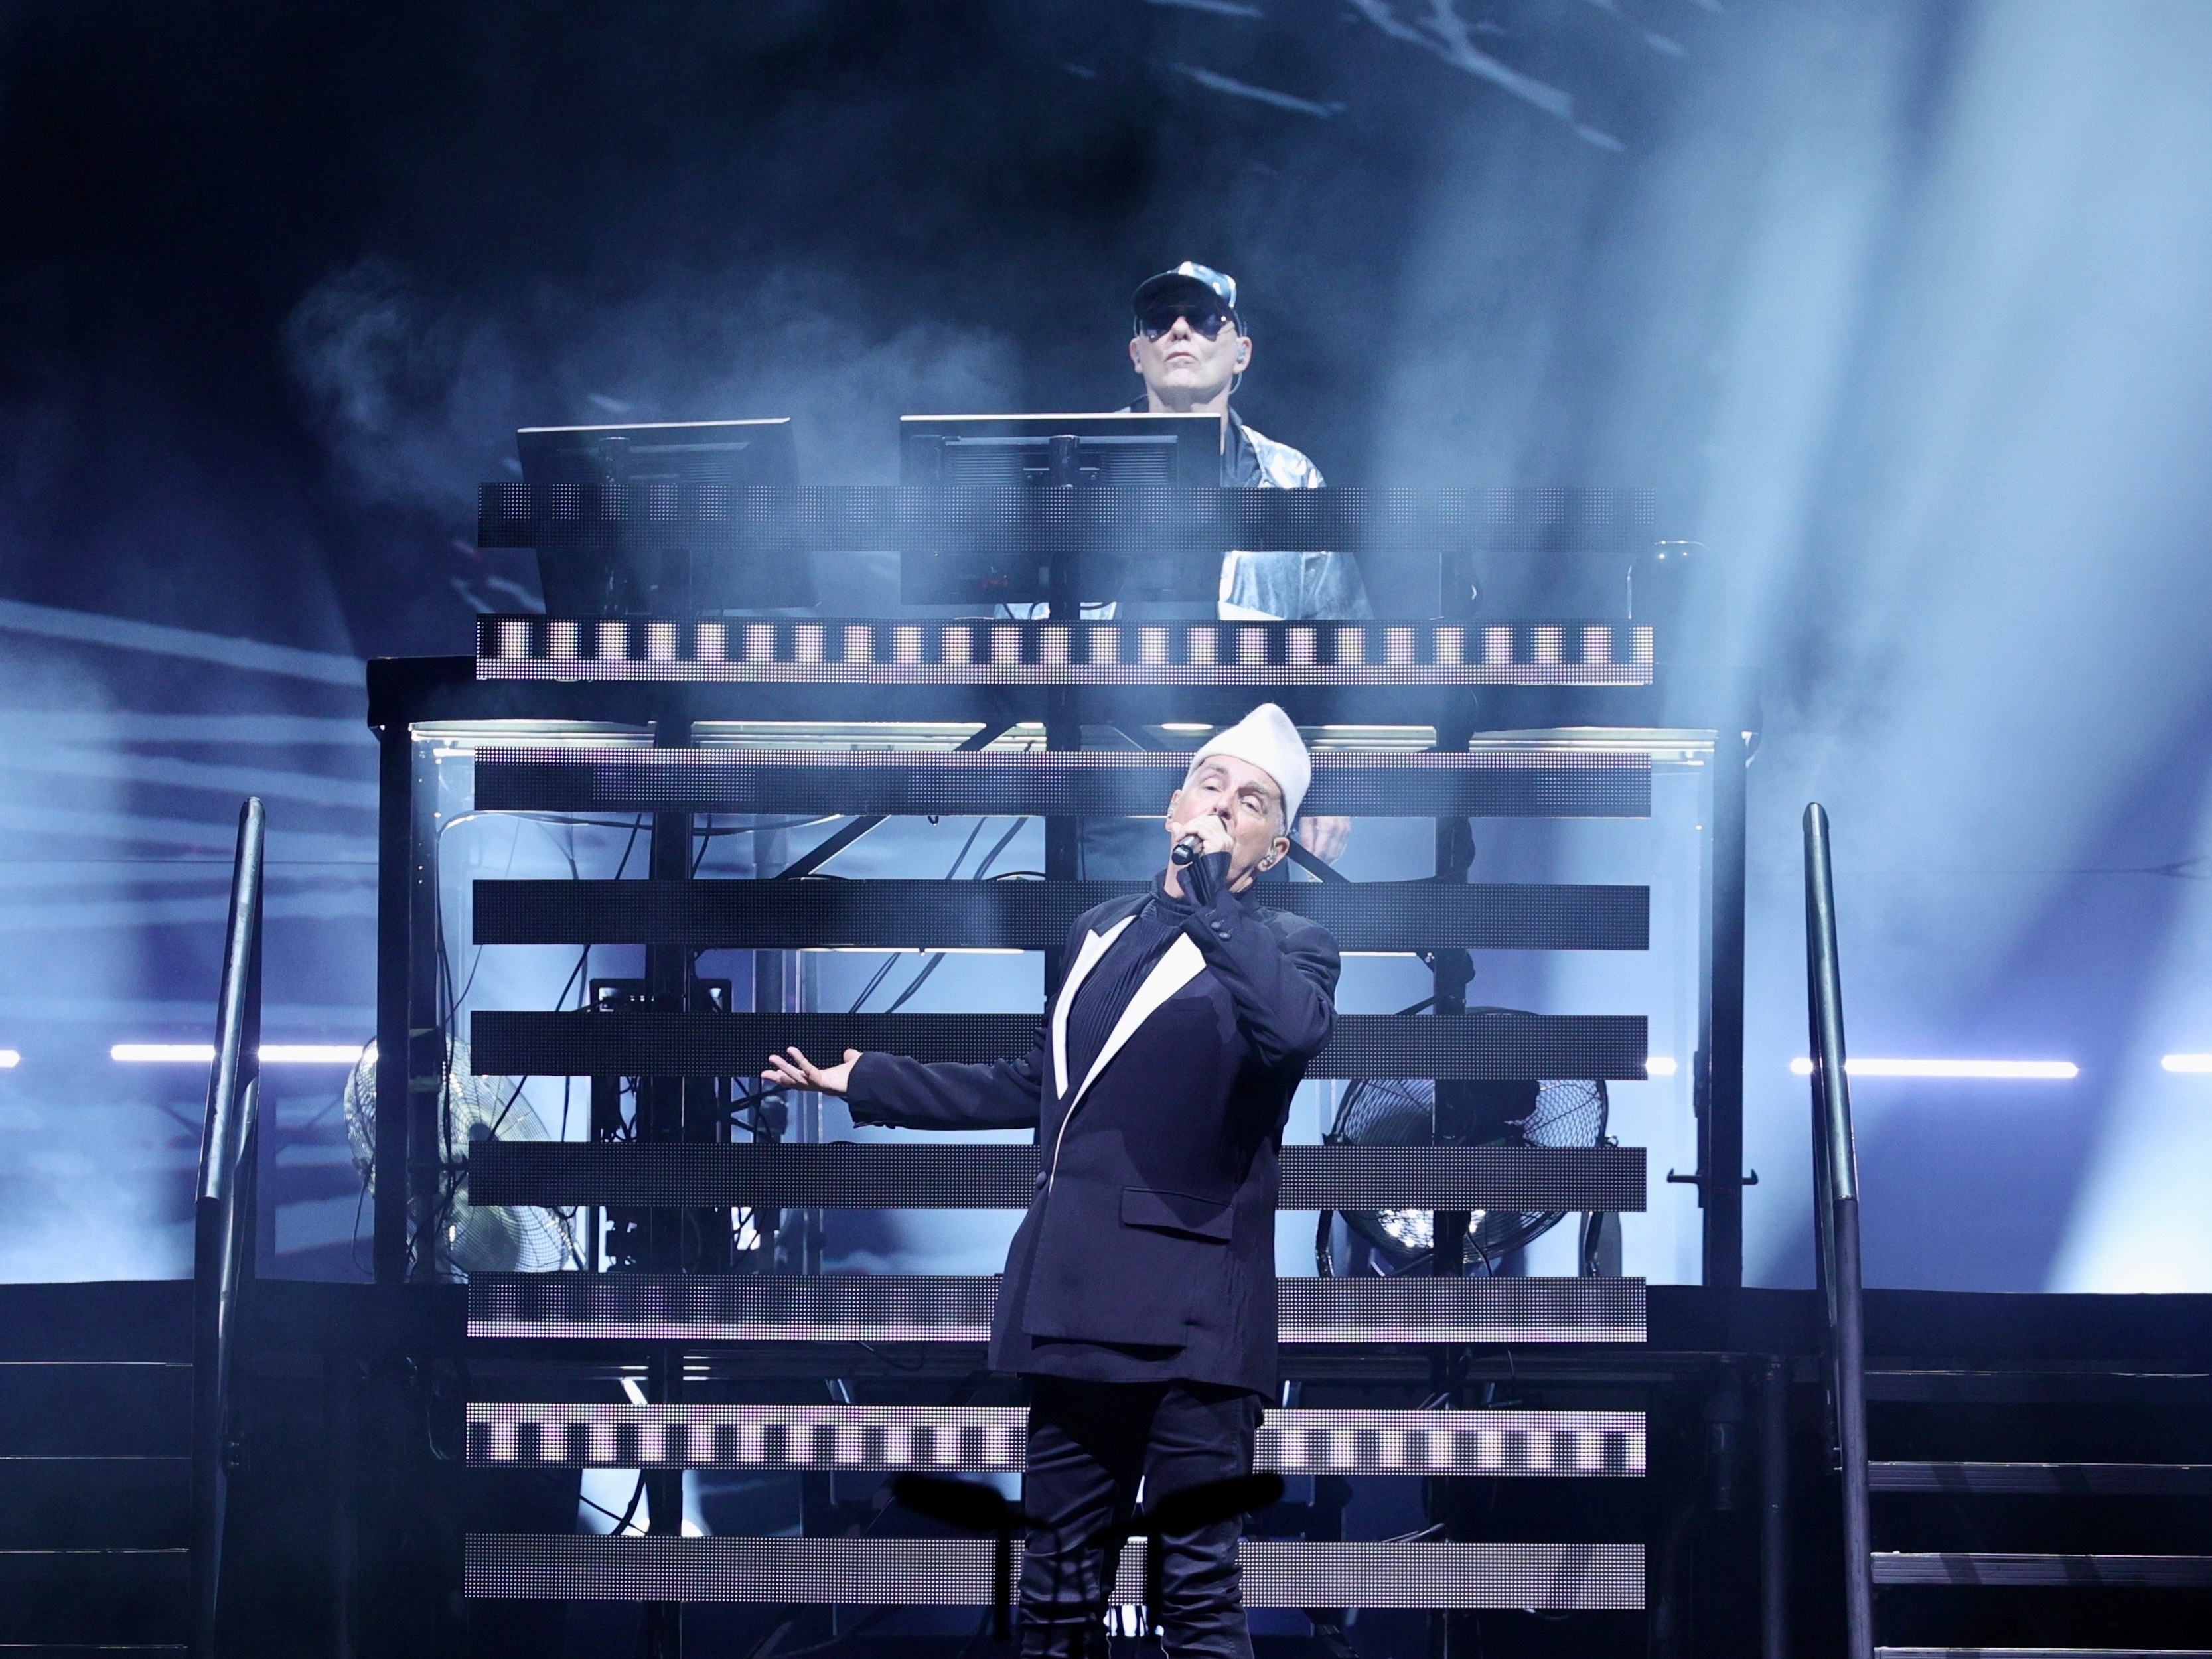 Pet Shop Boys Perform “West End Girls” – The Delete Bin